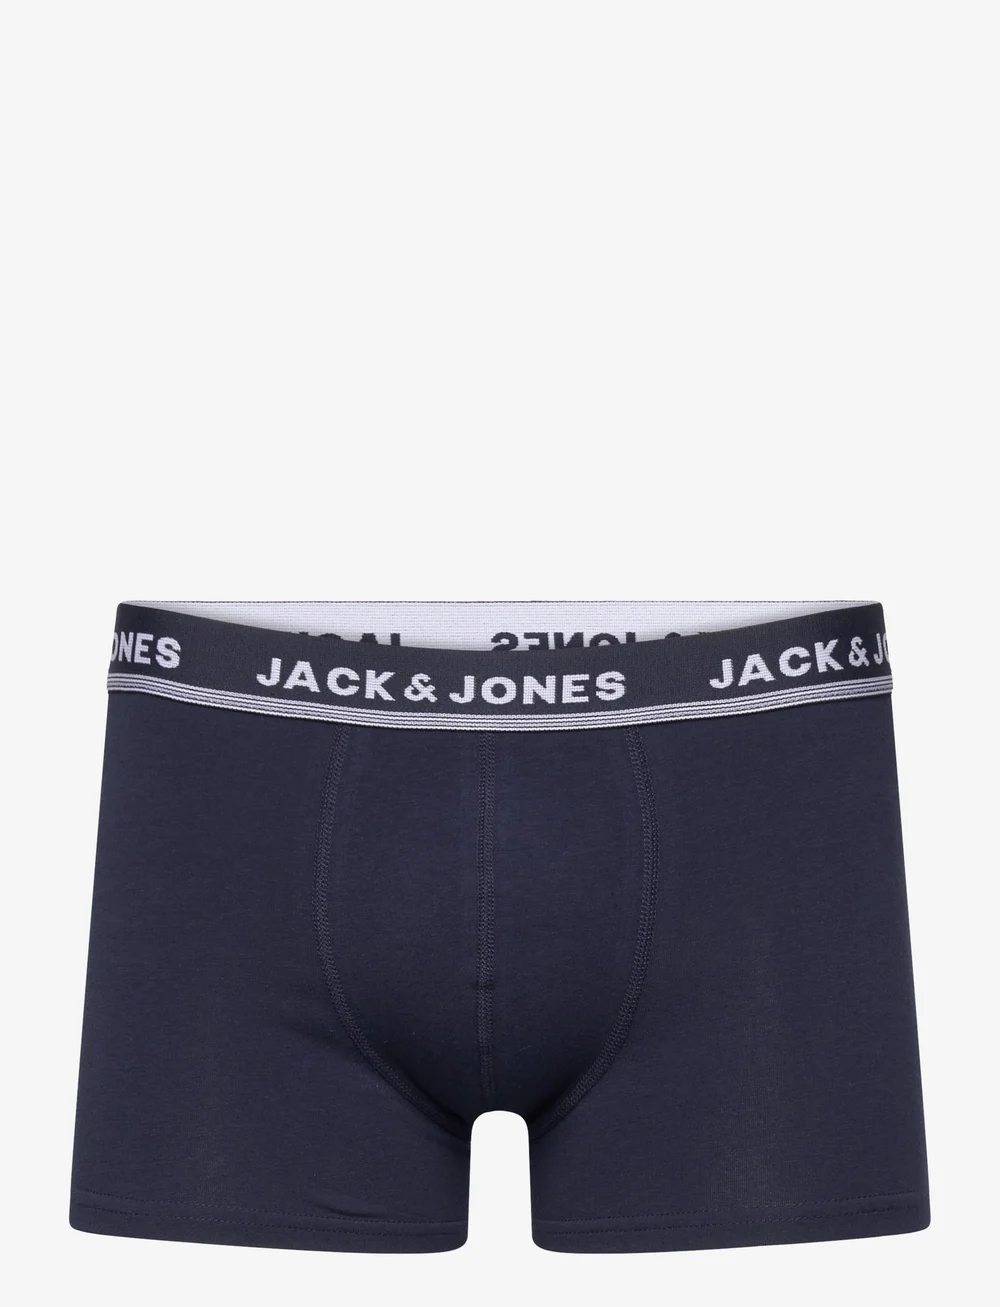 Jack & Jones Jaccolorful Kent Trunks 5 Pack - Boxers 